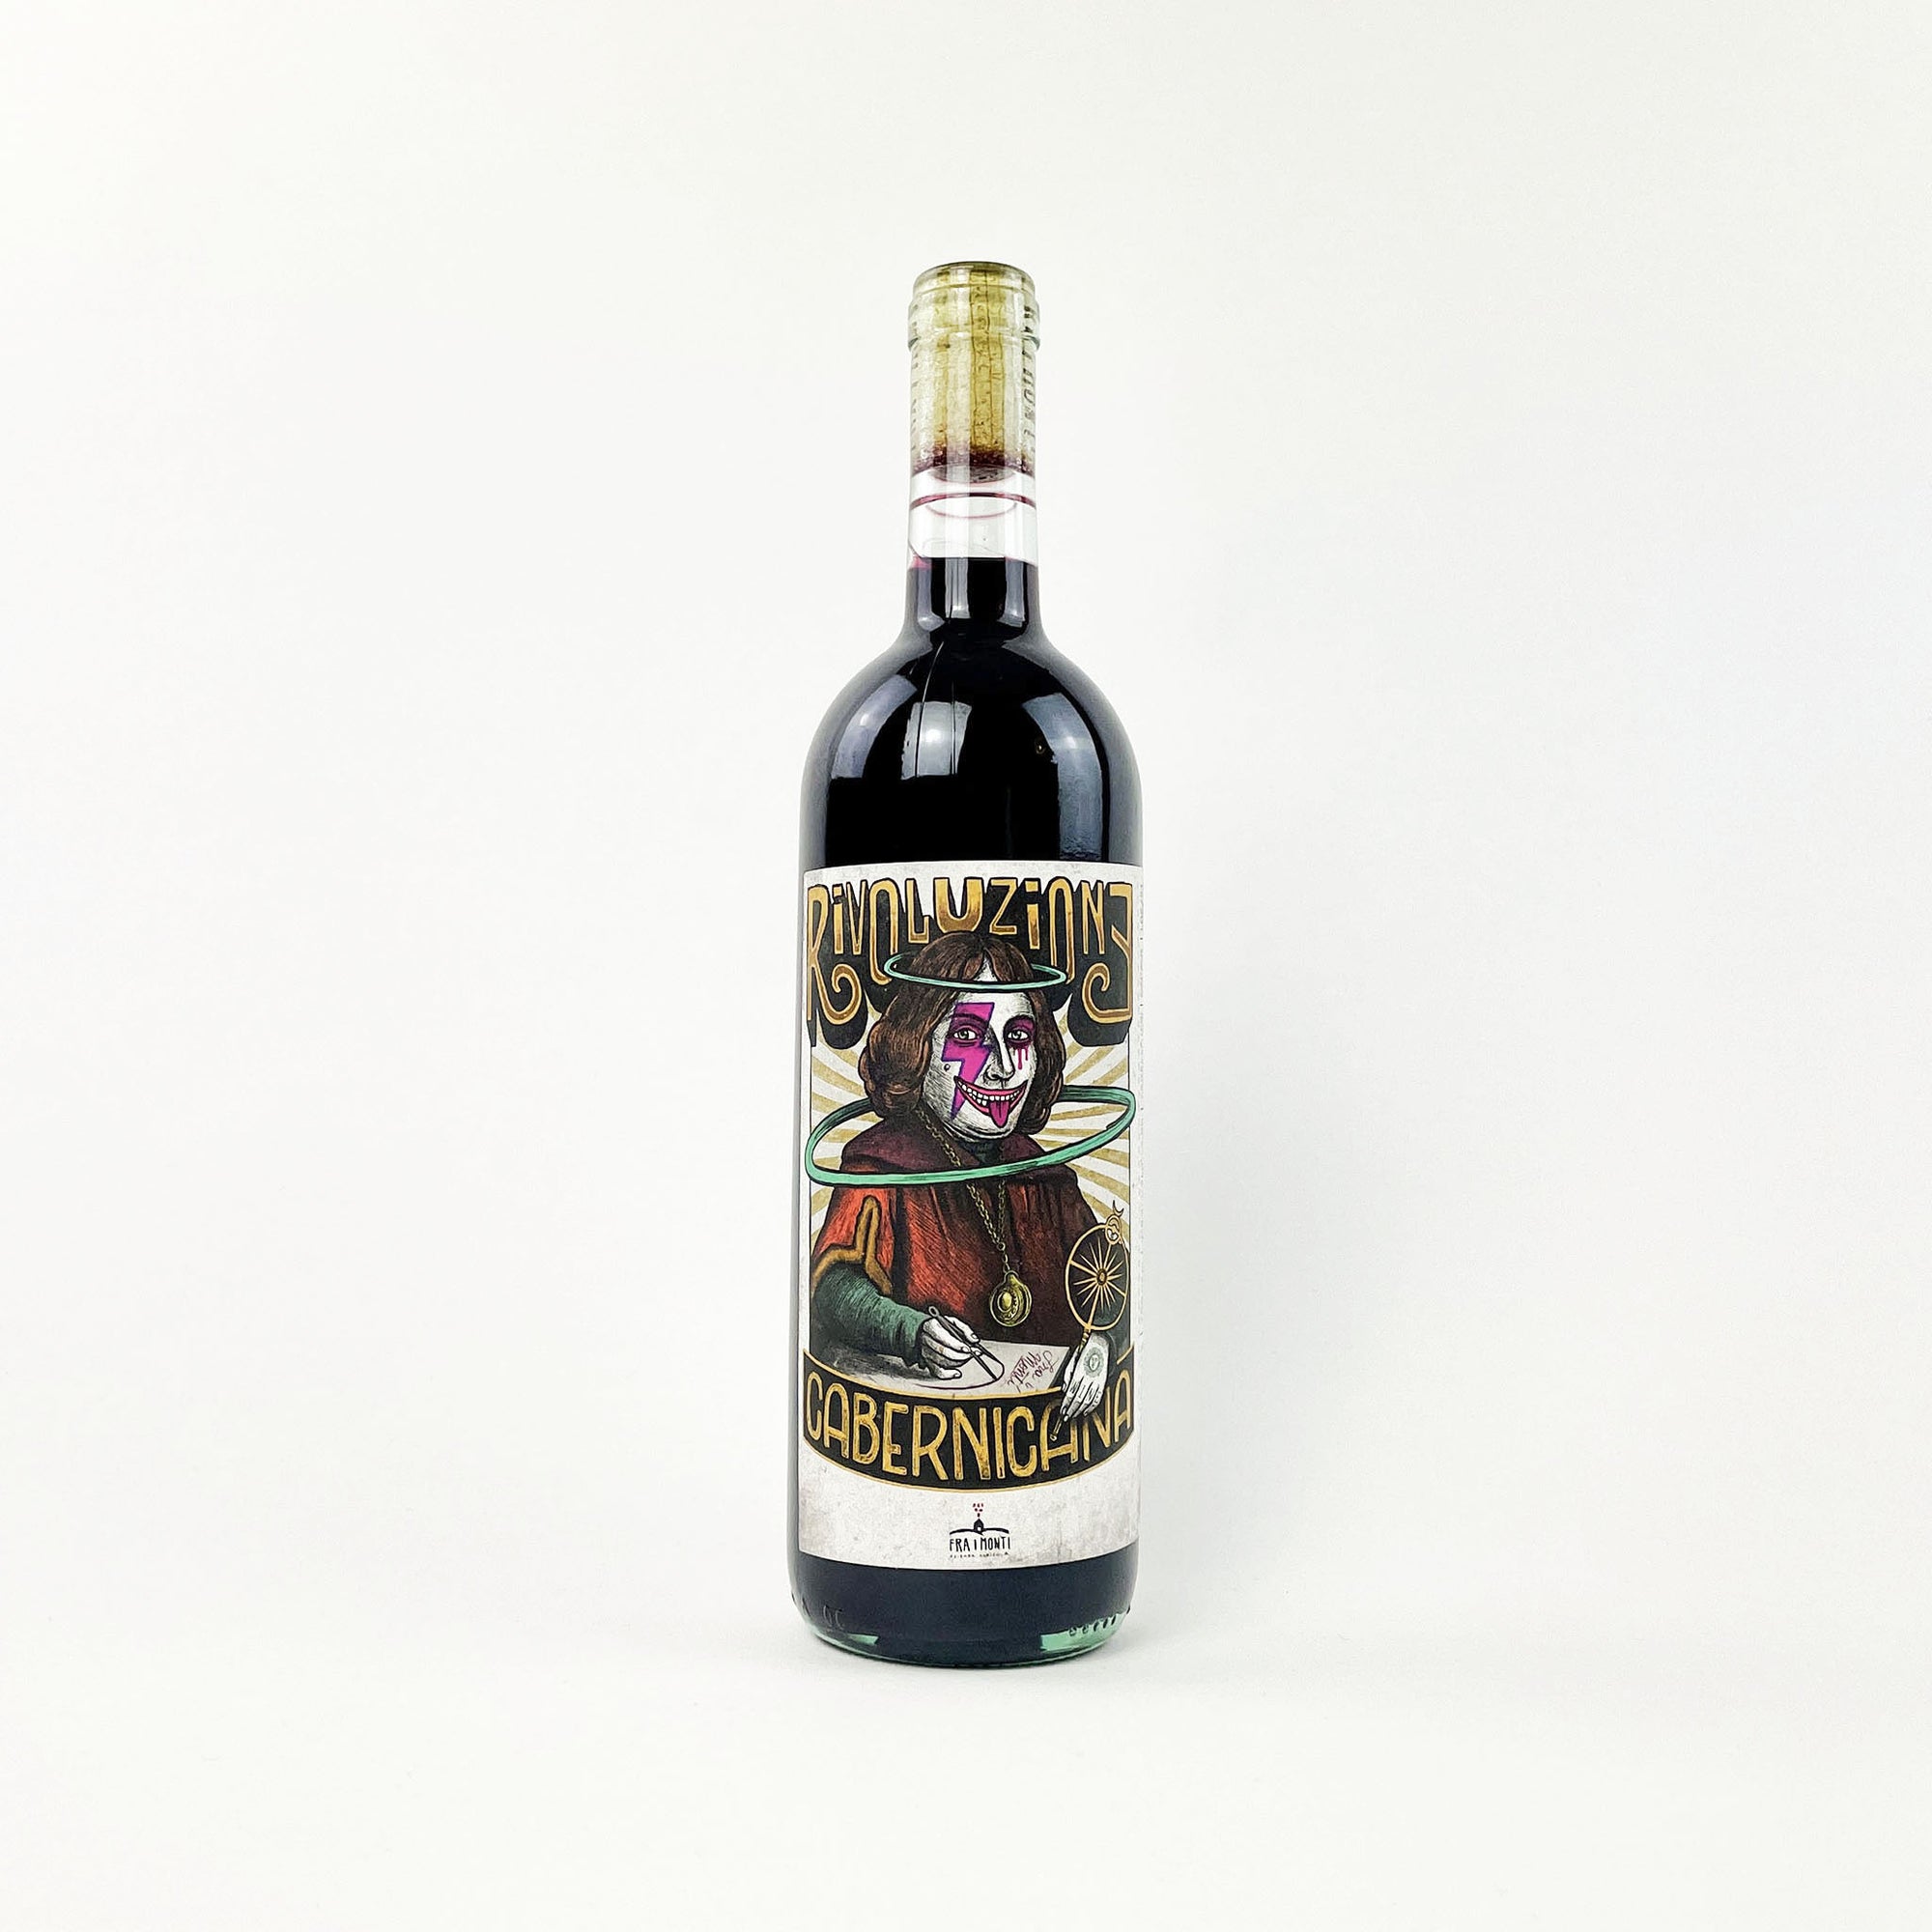 Fra I Monti Rivoluzione Cabernicana natural red wine bottle